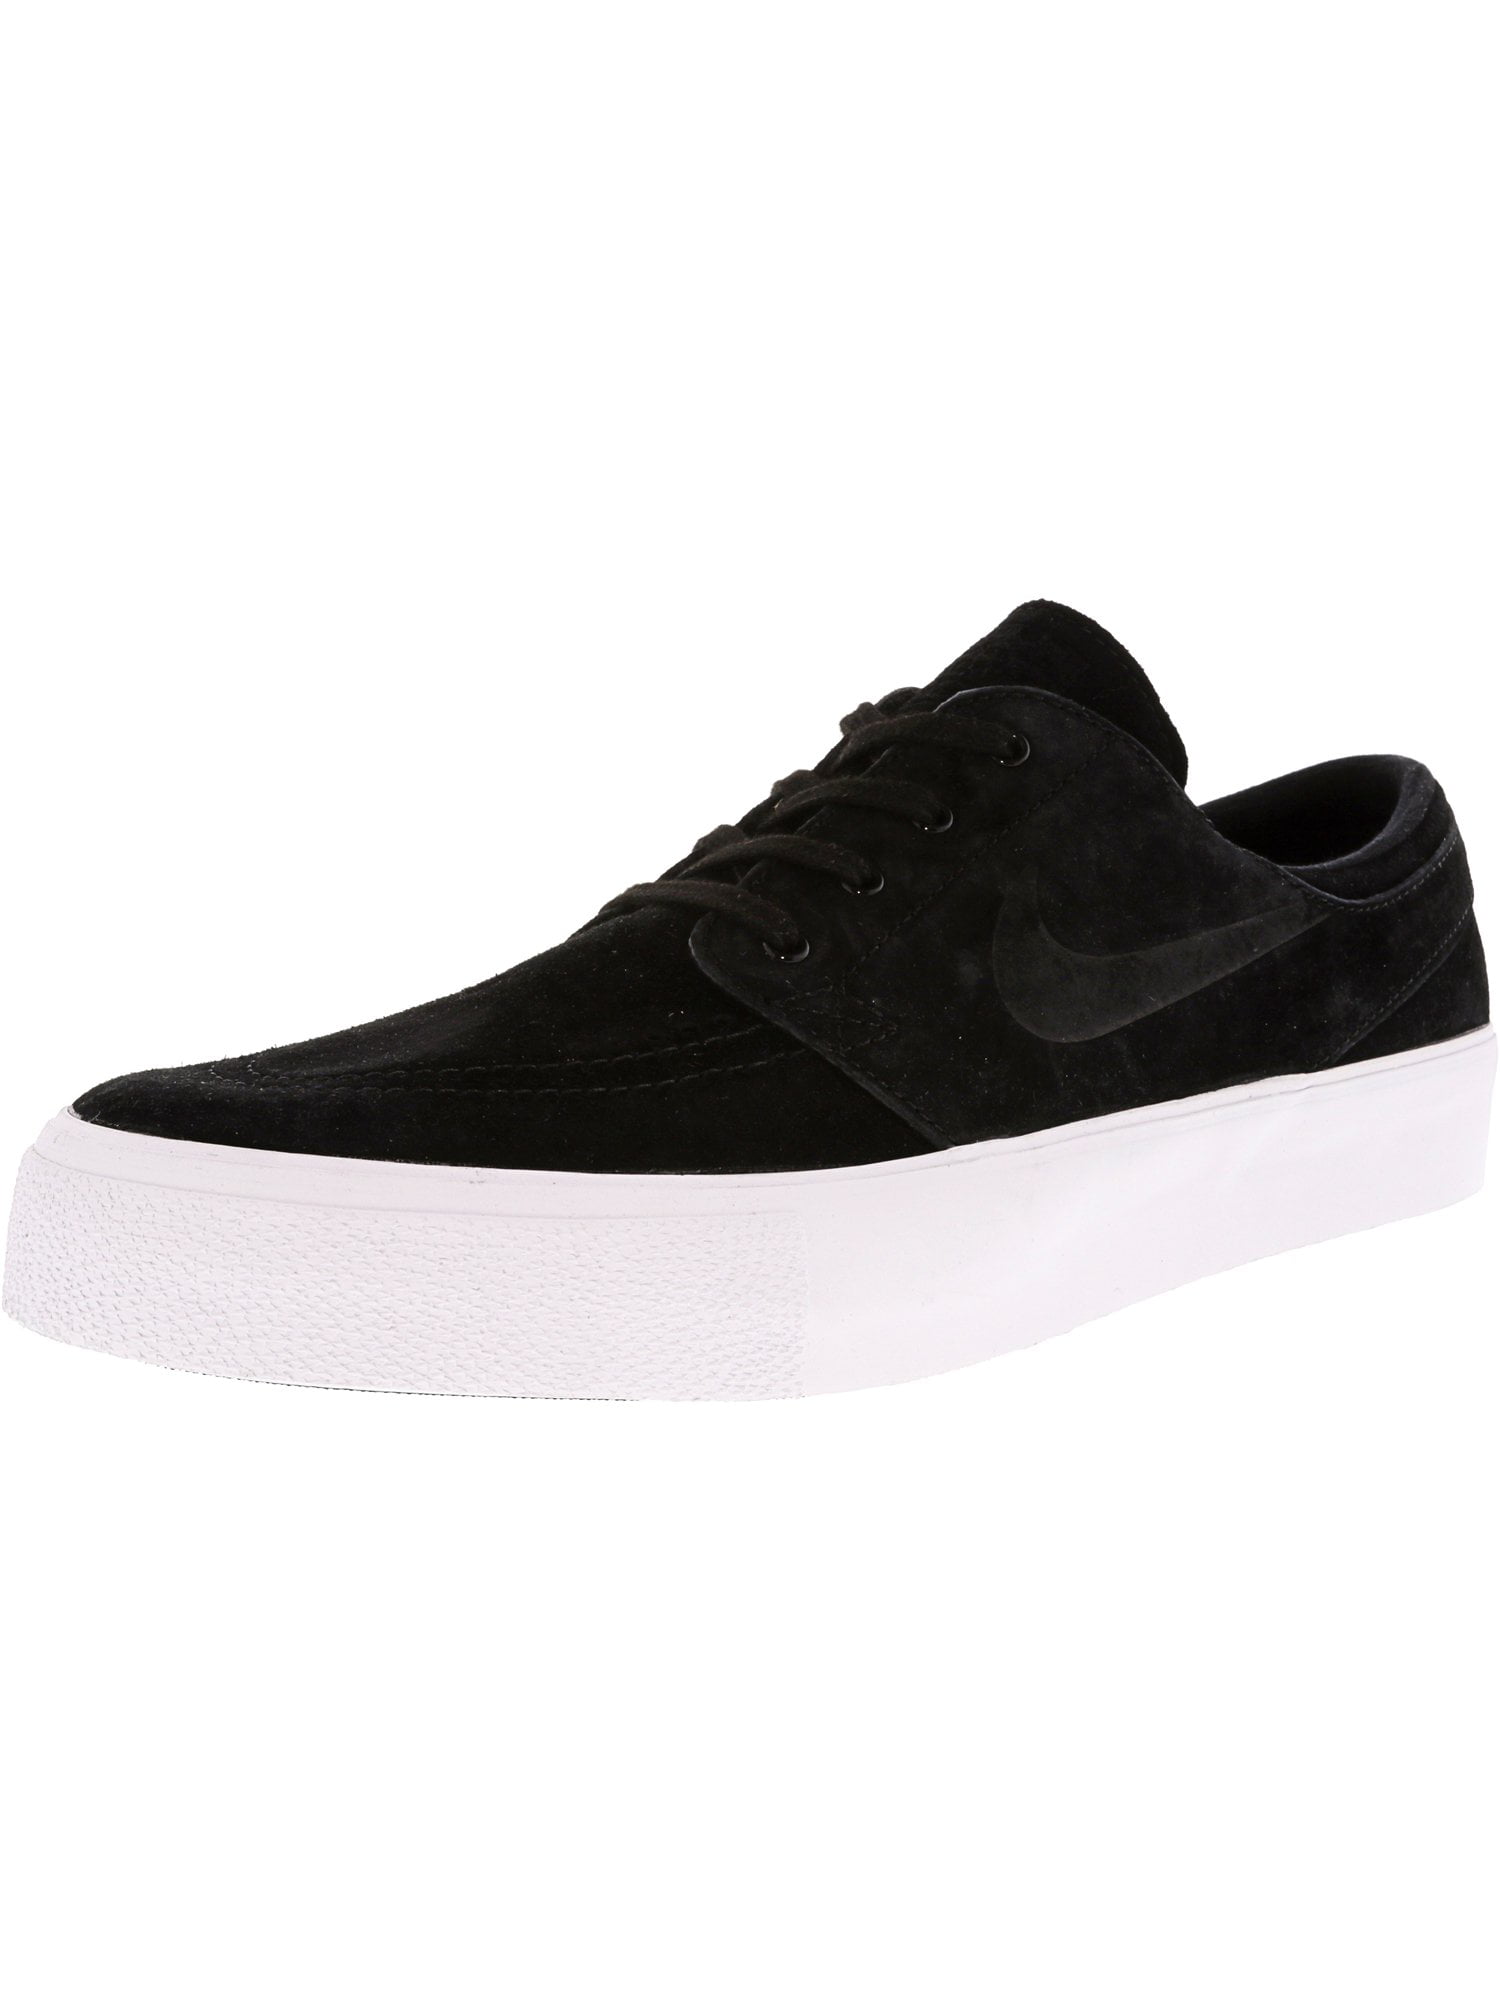 Nike Men's Zoom Janoski Ht Black / Black-White Low Top Suede Skateboarding Shoe - 11M - Walmart.com